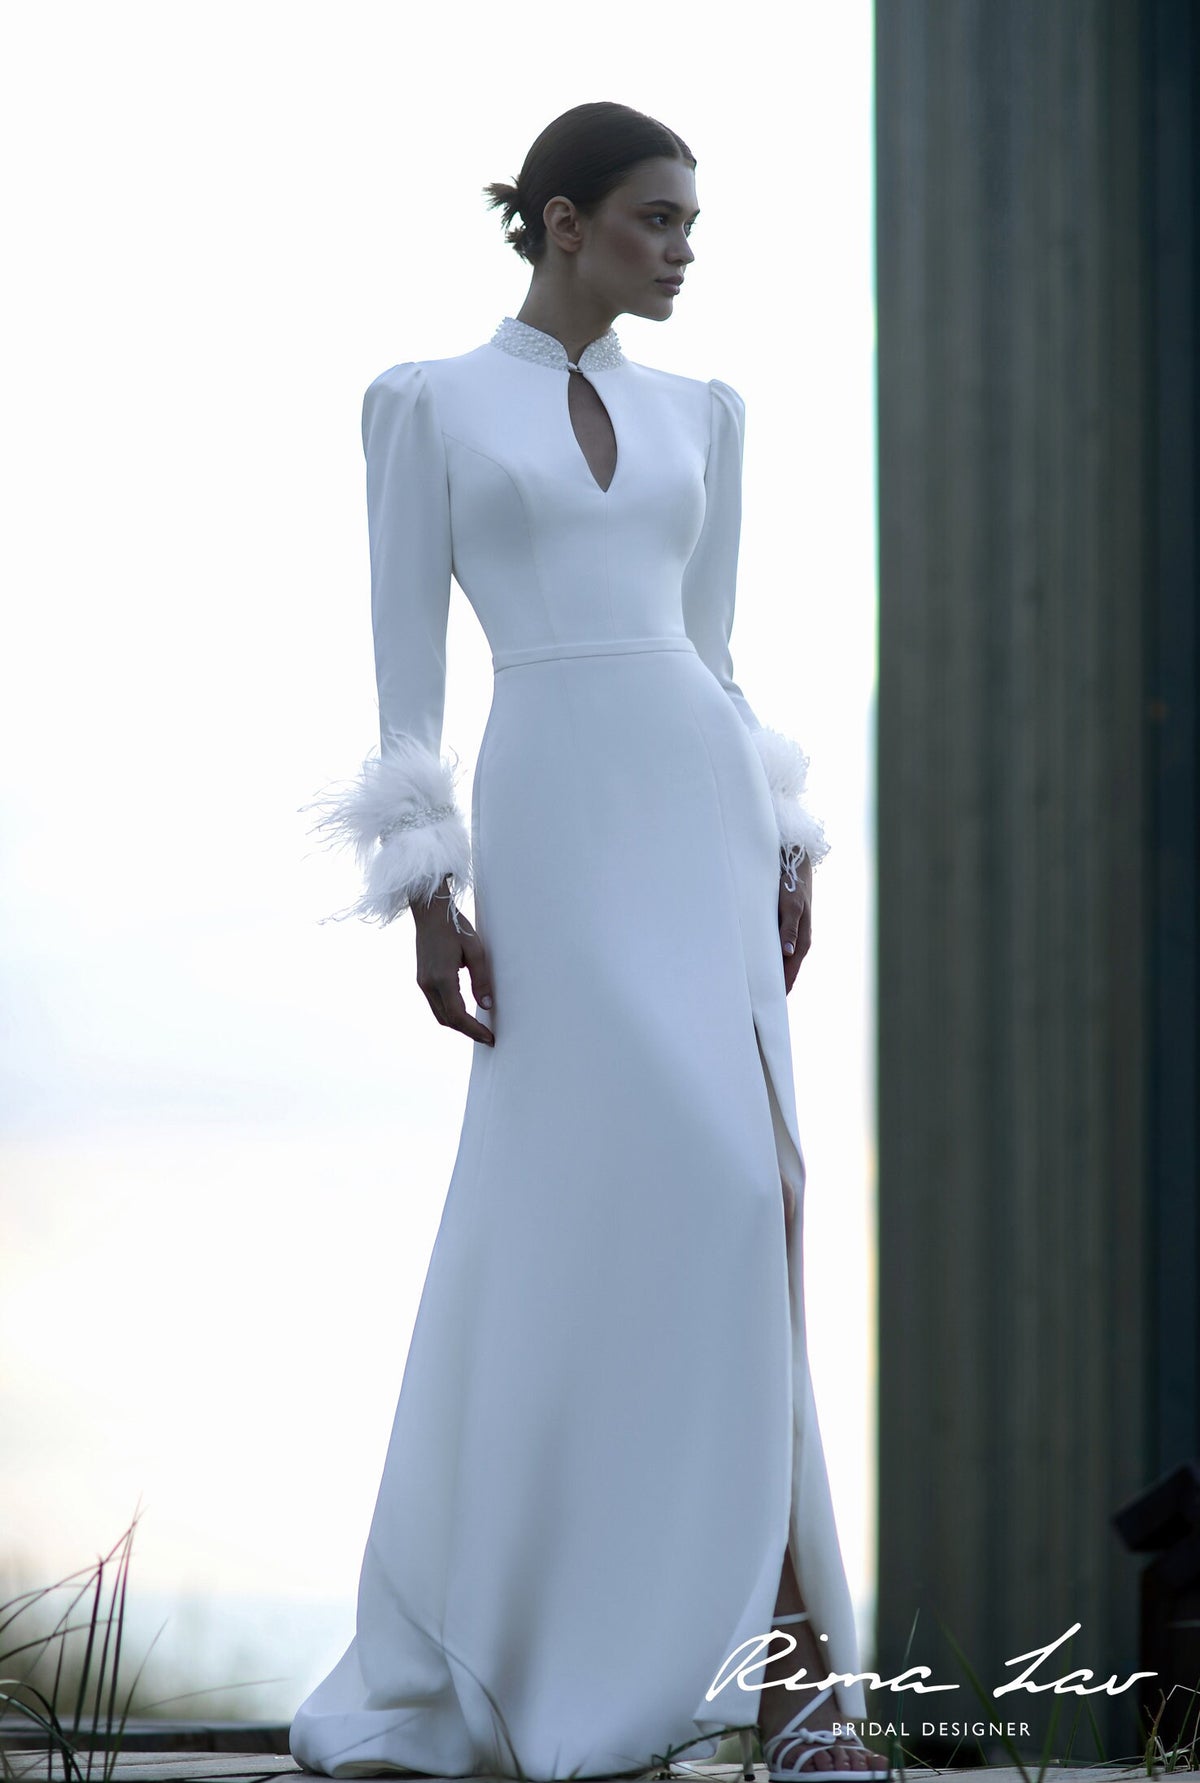 Custom High Neckline Minimalist Sheath Long Sleeve Modest Closed Back Wedding Dress Bridal Gown Ivory Feathers at Cuffs Side Slit